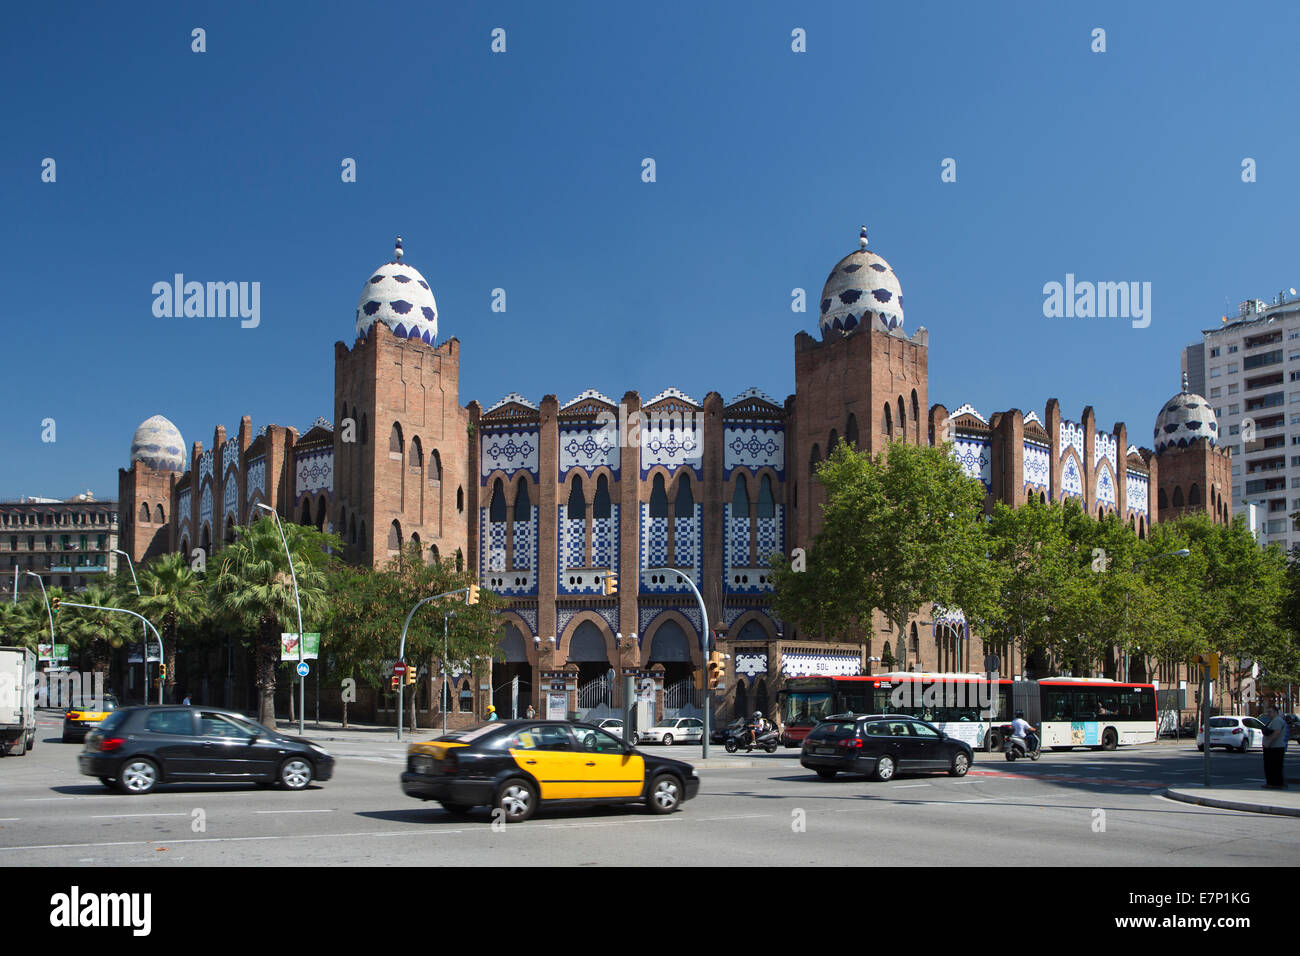 Avenue, Bullfighting, architecture, Barcelona, Catalonia, gran via, monumental, Moorish, skyline, Spain, Europe, taxi, touristic Stock Photo